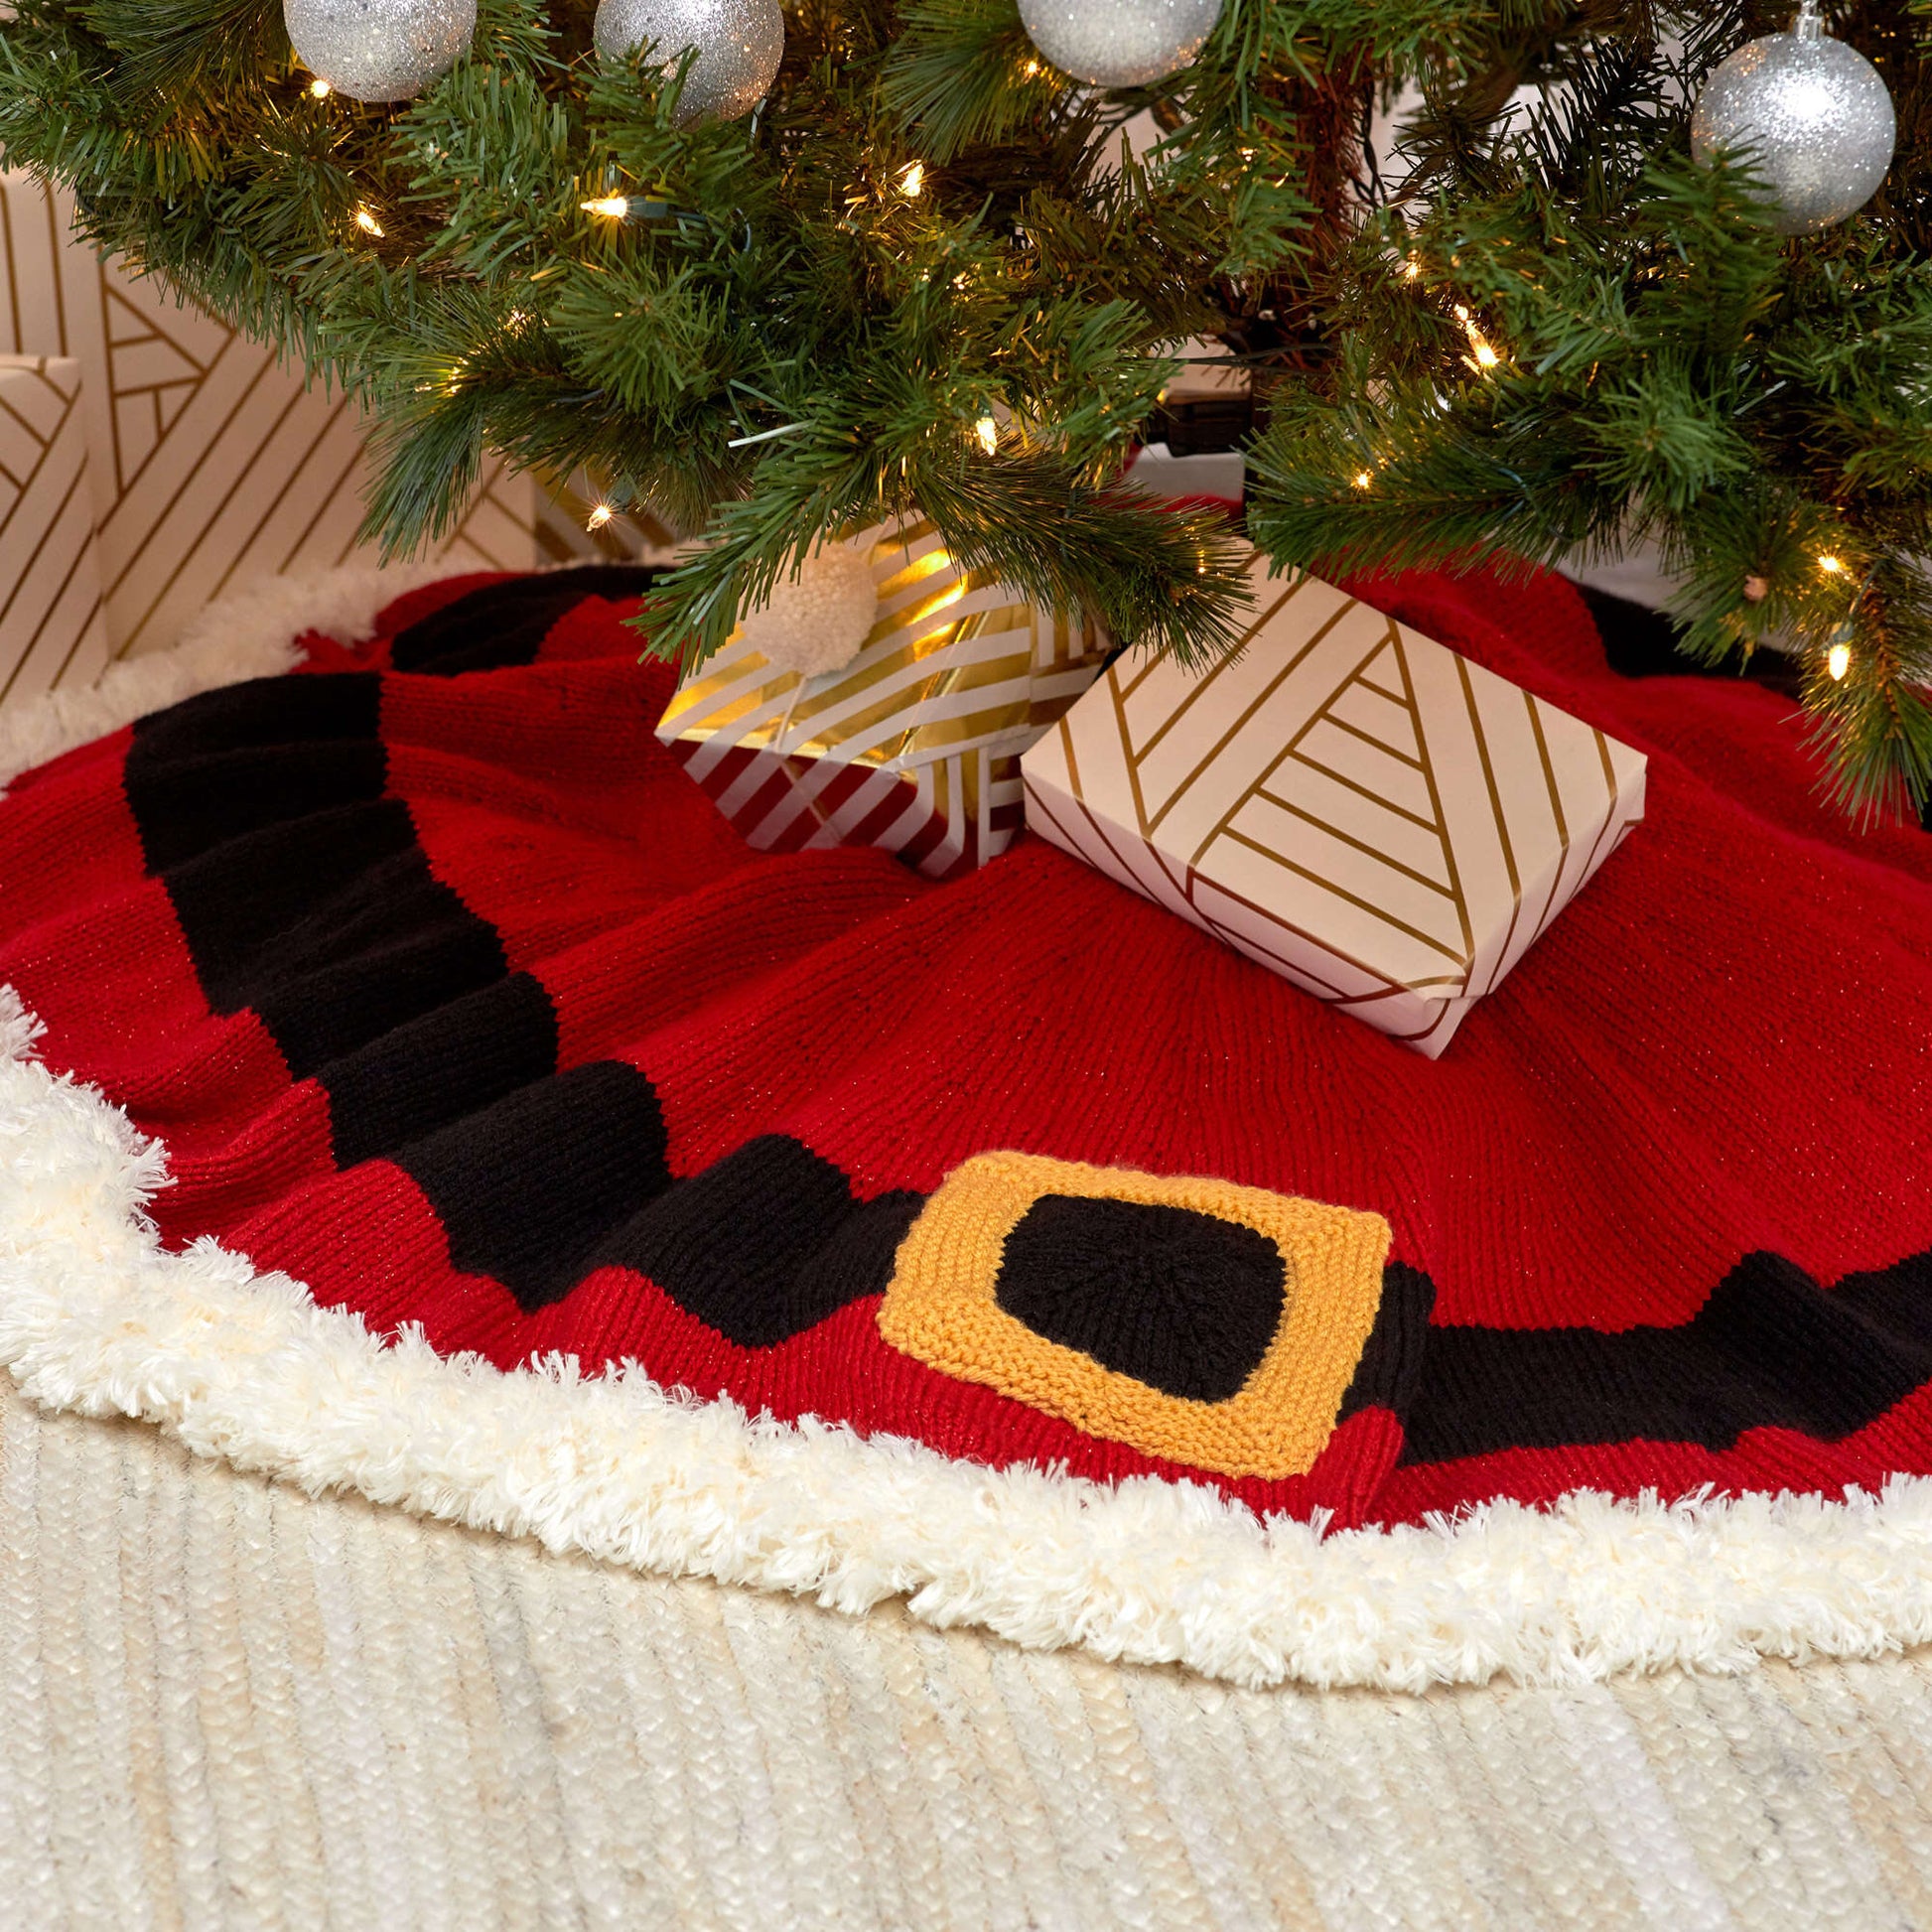 Free Red Heart Santa's Coat Tree Skirt Knit Pattern